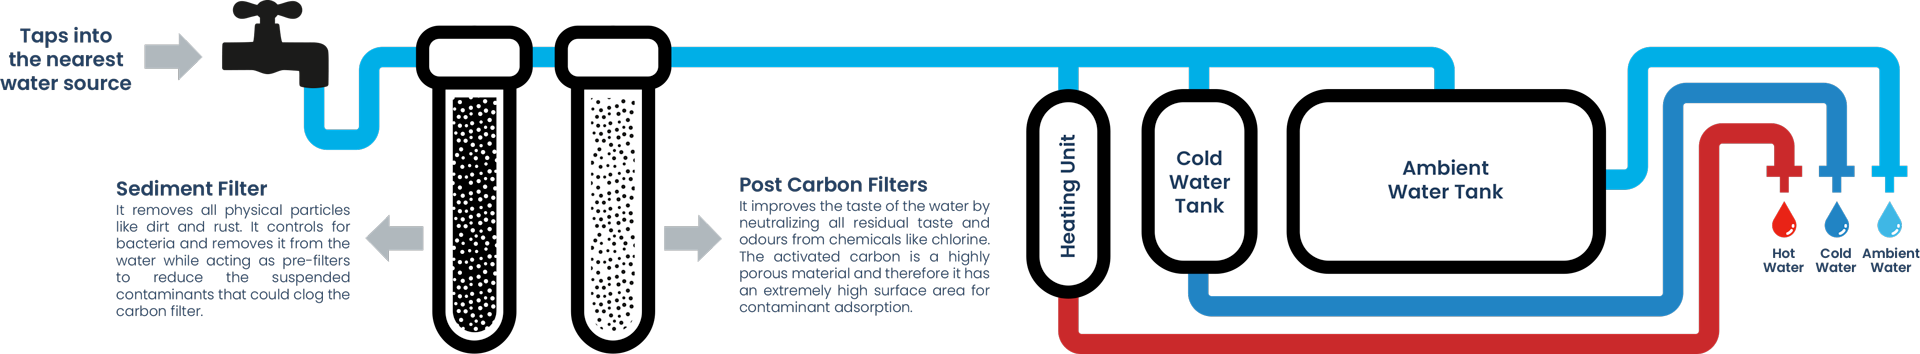 Filtration-Process